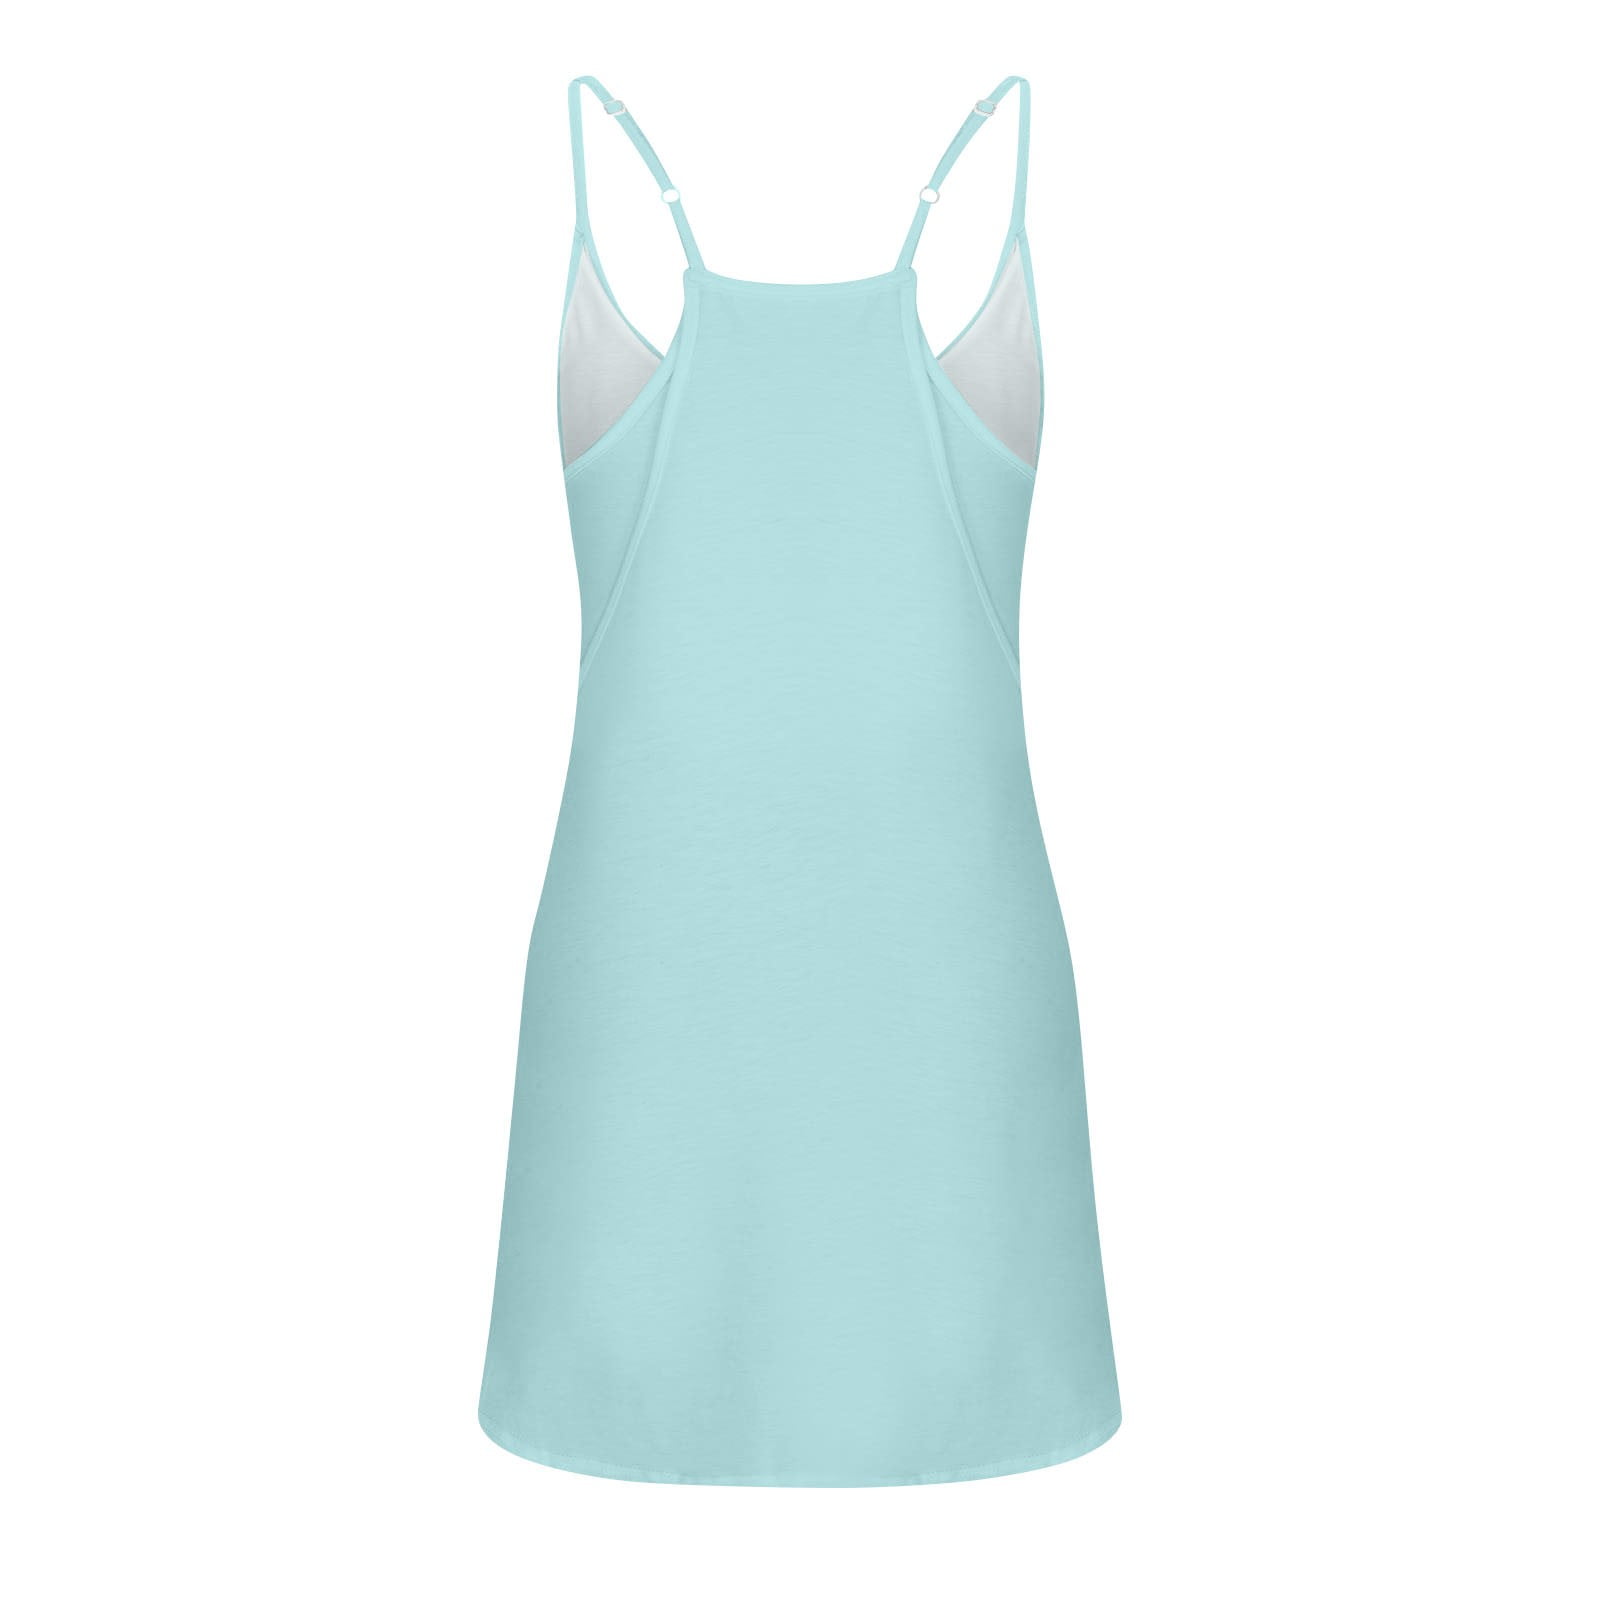 TQWQT Womens Summer Sleeveless Mini Dress V Neck Spaghetti Strap Sundress  Athletic Short Dress with Pockets Light Blue S 